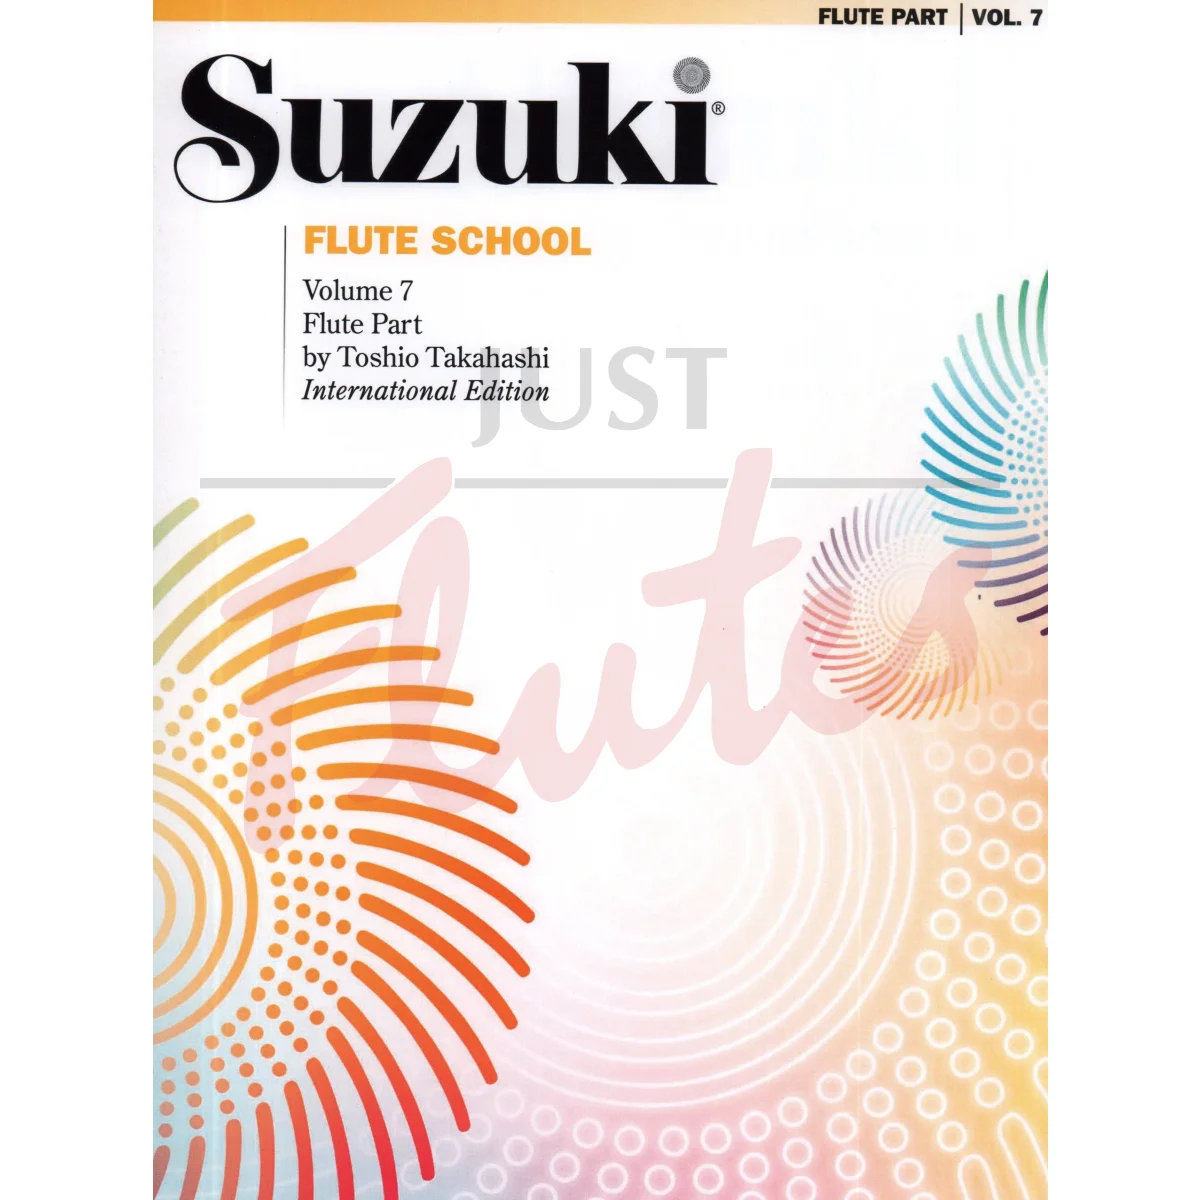 Suzuki Flute School Vol 7 (International Edition) [Flute Part]